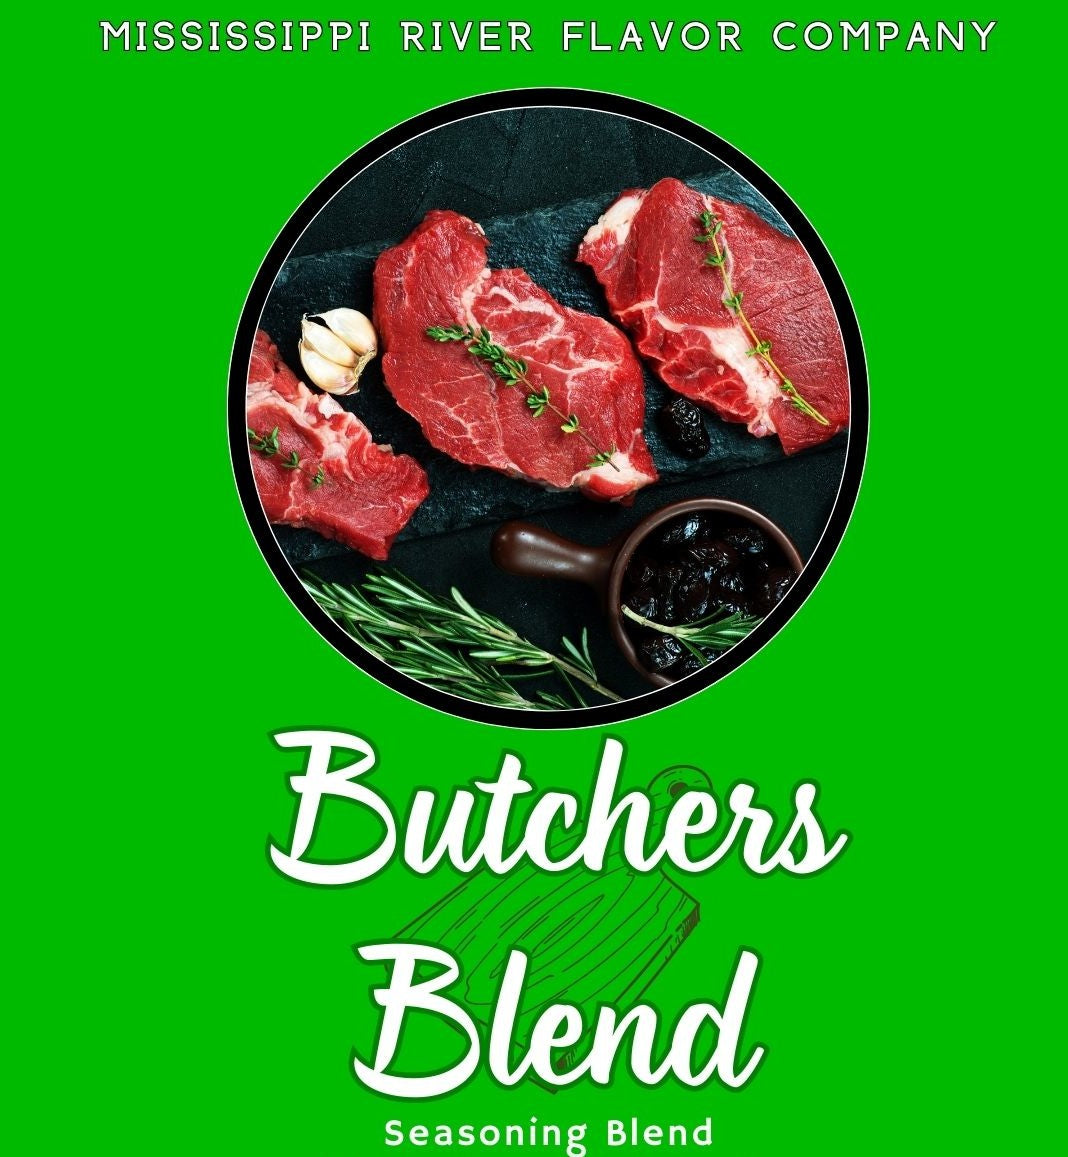 Butchers Blend